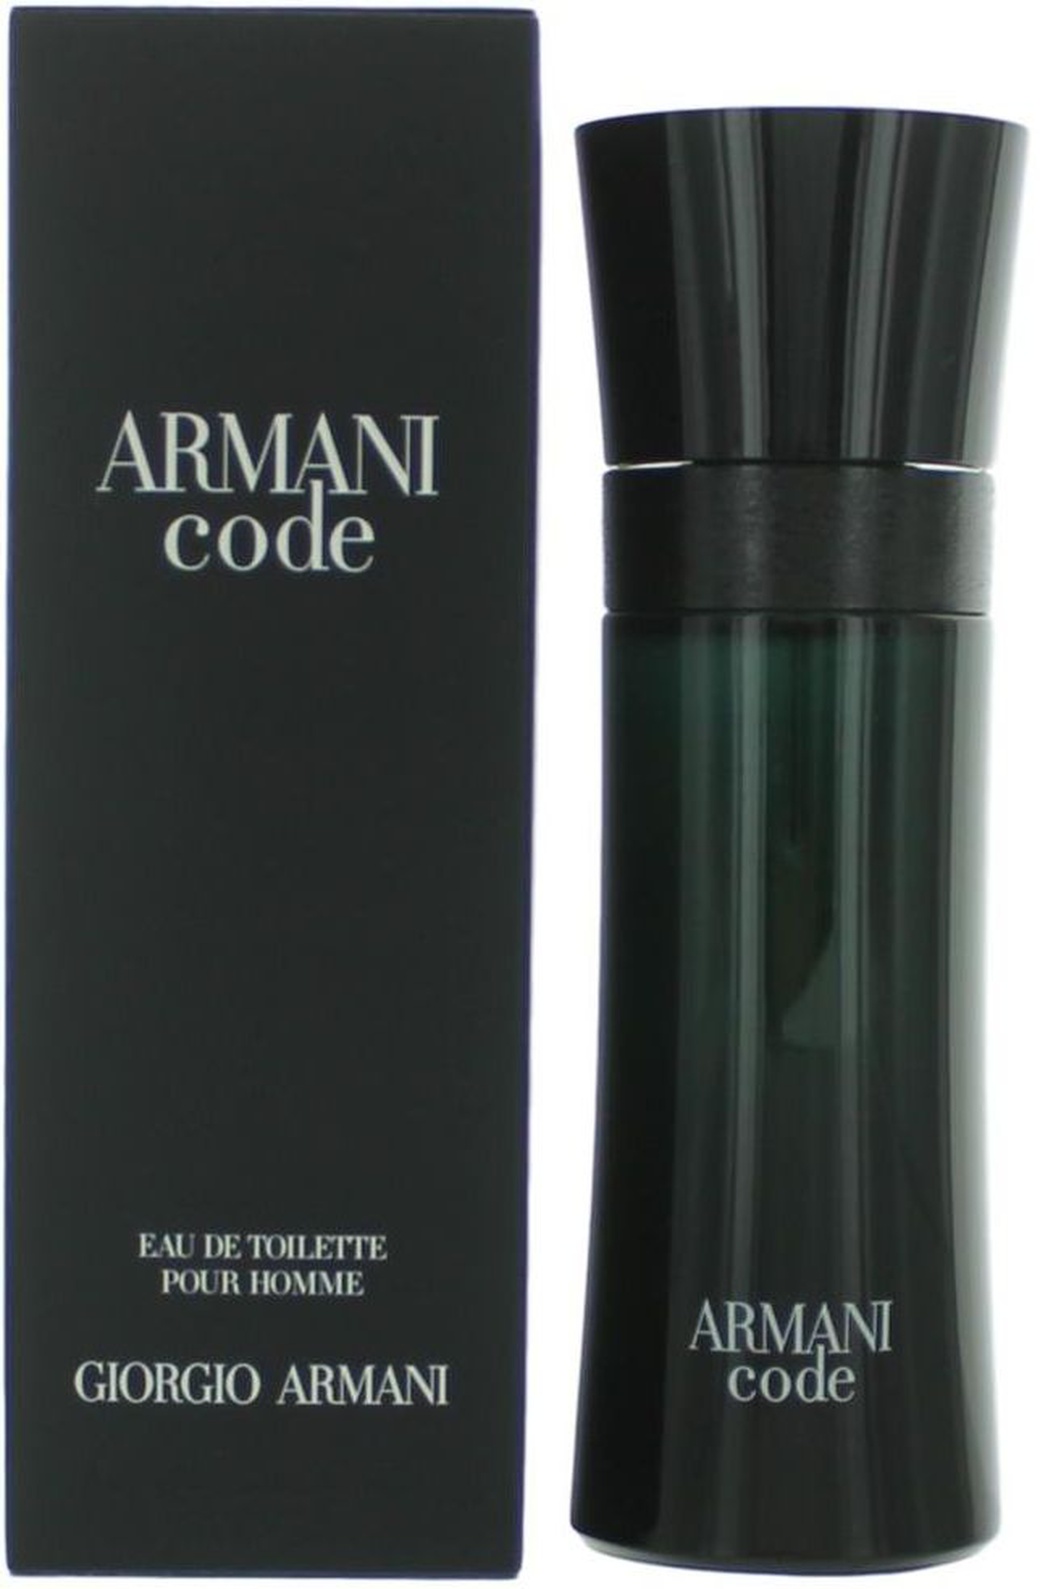 Армани черный мужской. Giorgio Armani "Armani code Parfum" 125 ml. Giorgio Armani code 75мл. Armani code Parfum мужской. Armani code Parfum 75 ml.